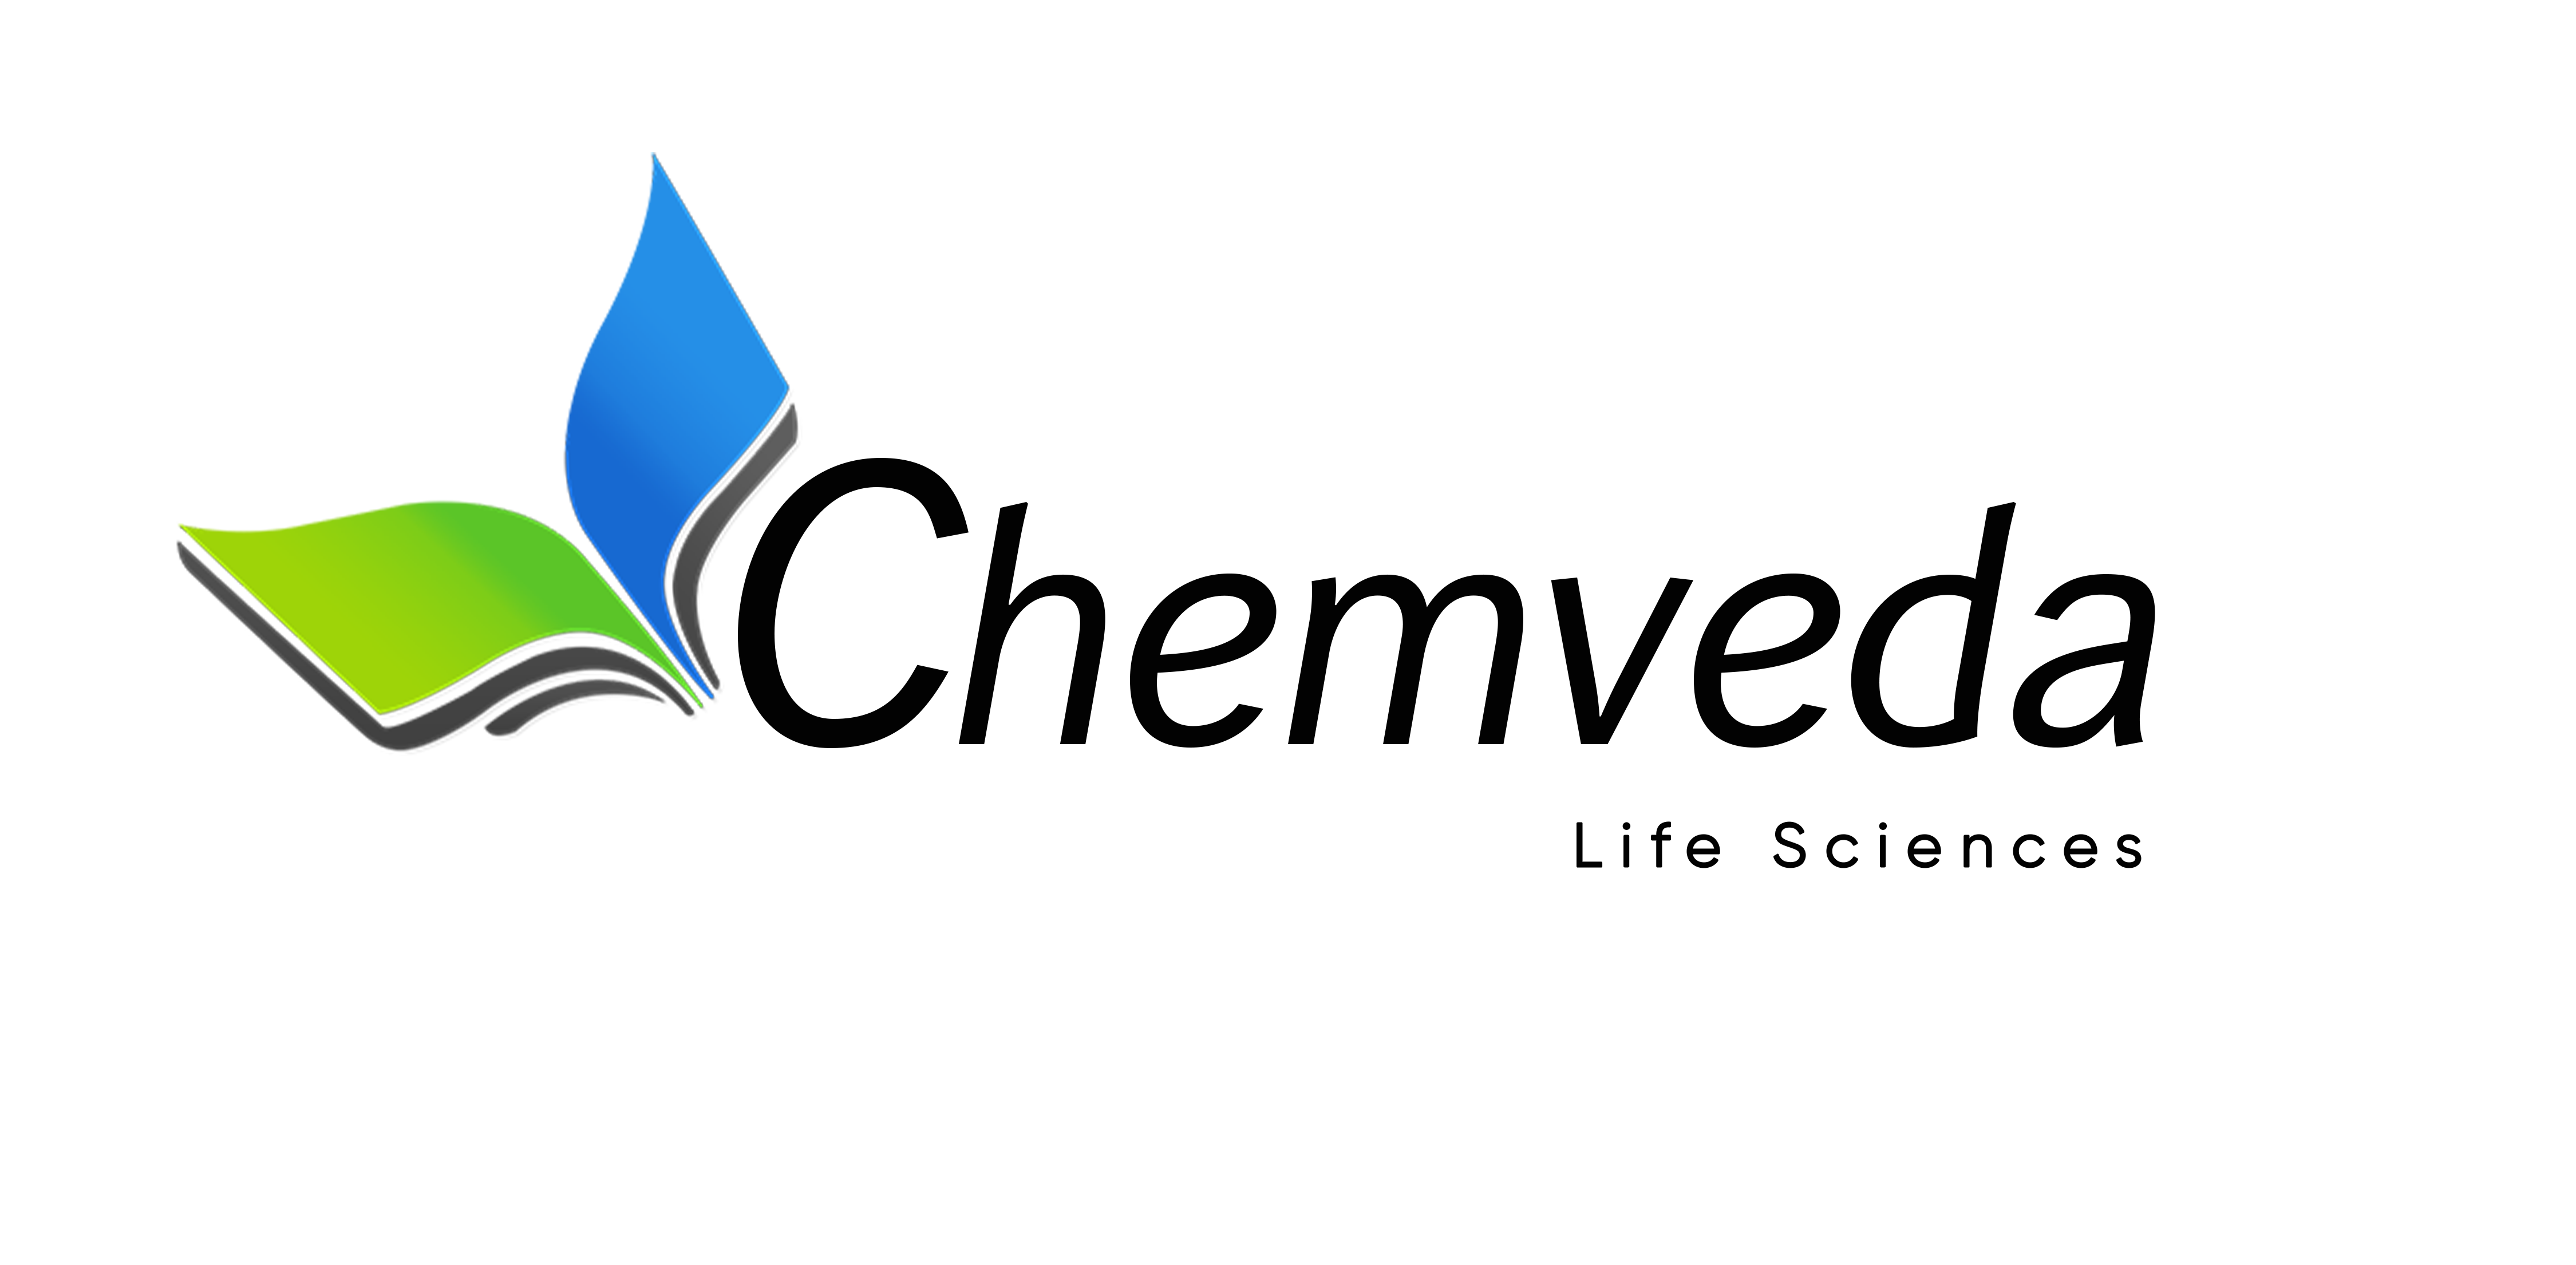 Chemveda life sciences India Pvt. Ltd.